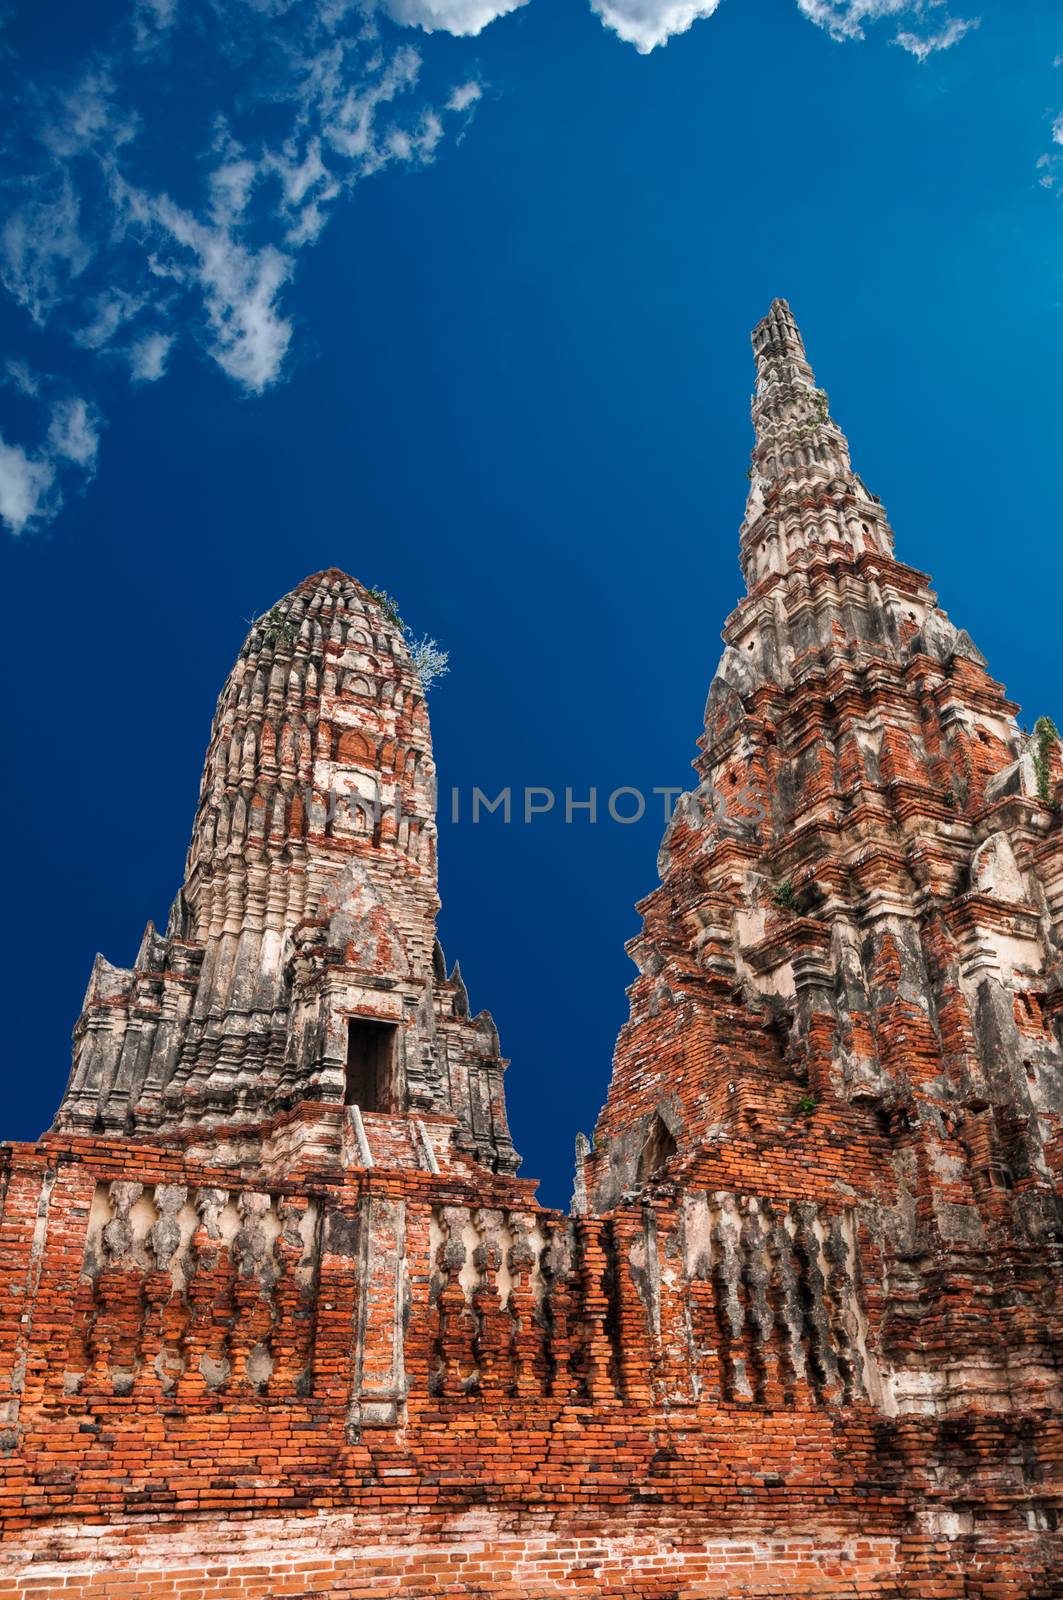 Old Temple Wat Chai watthanaram in Ancient Ayuttaya,Thailand